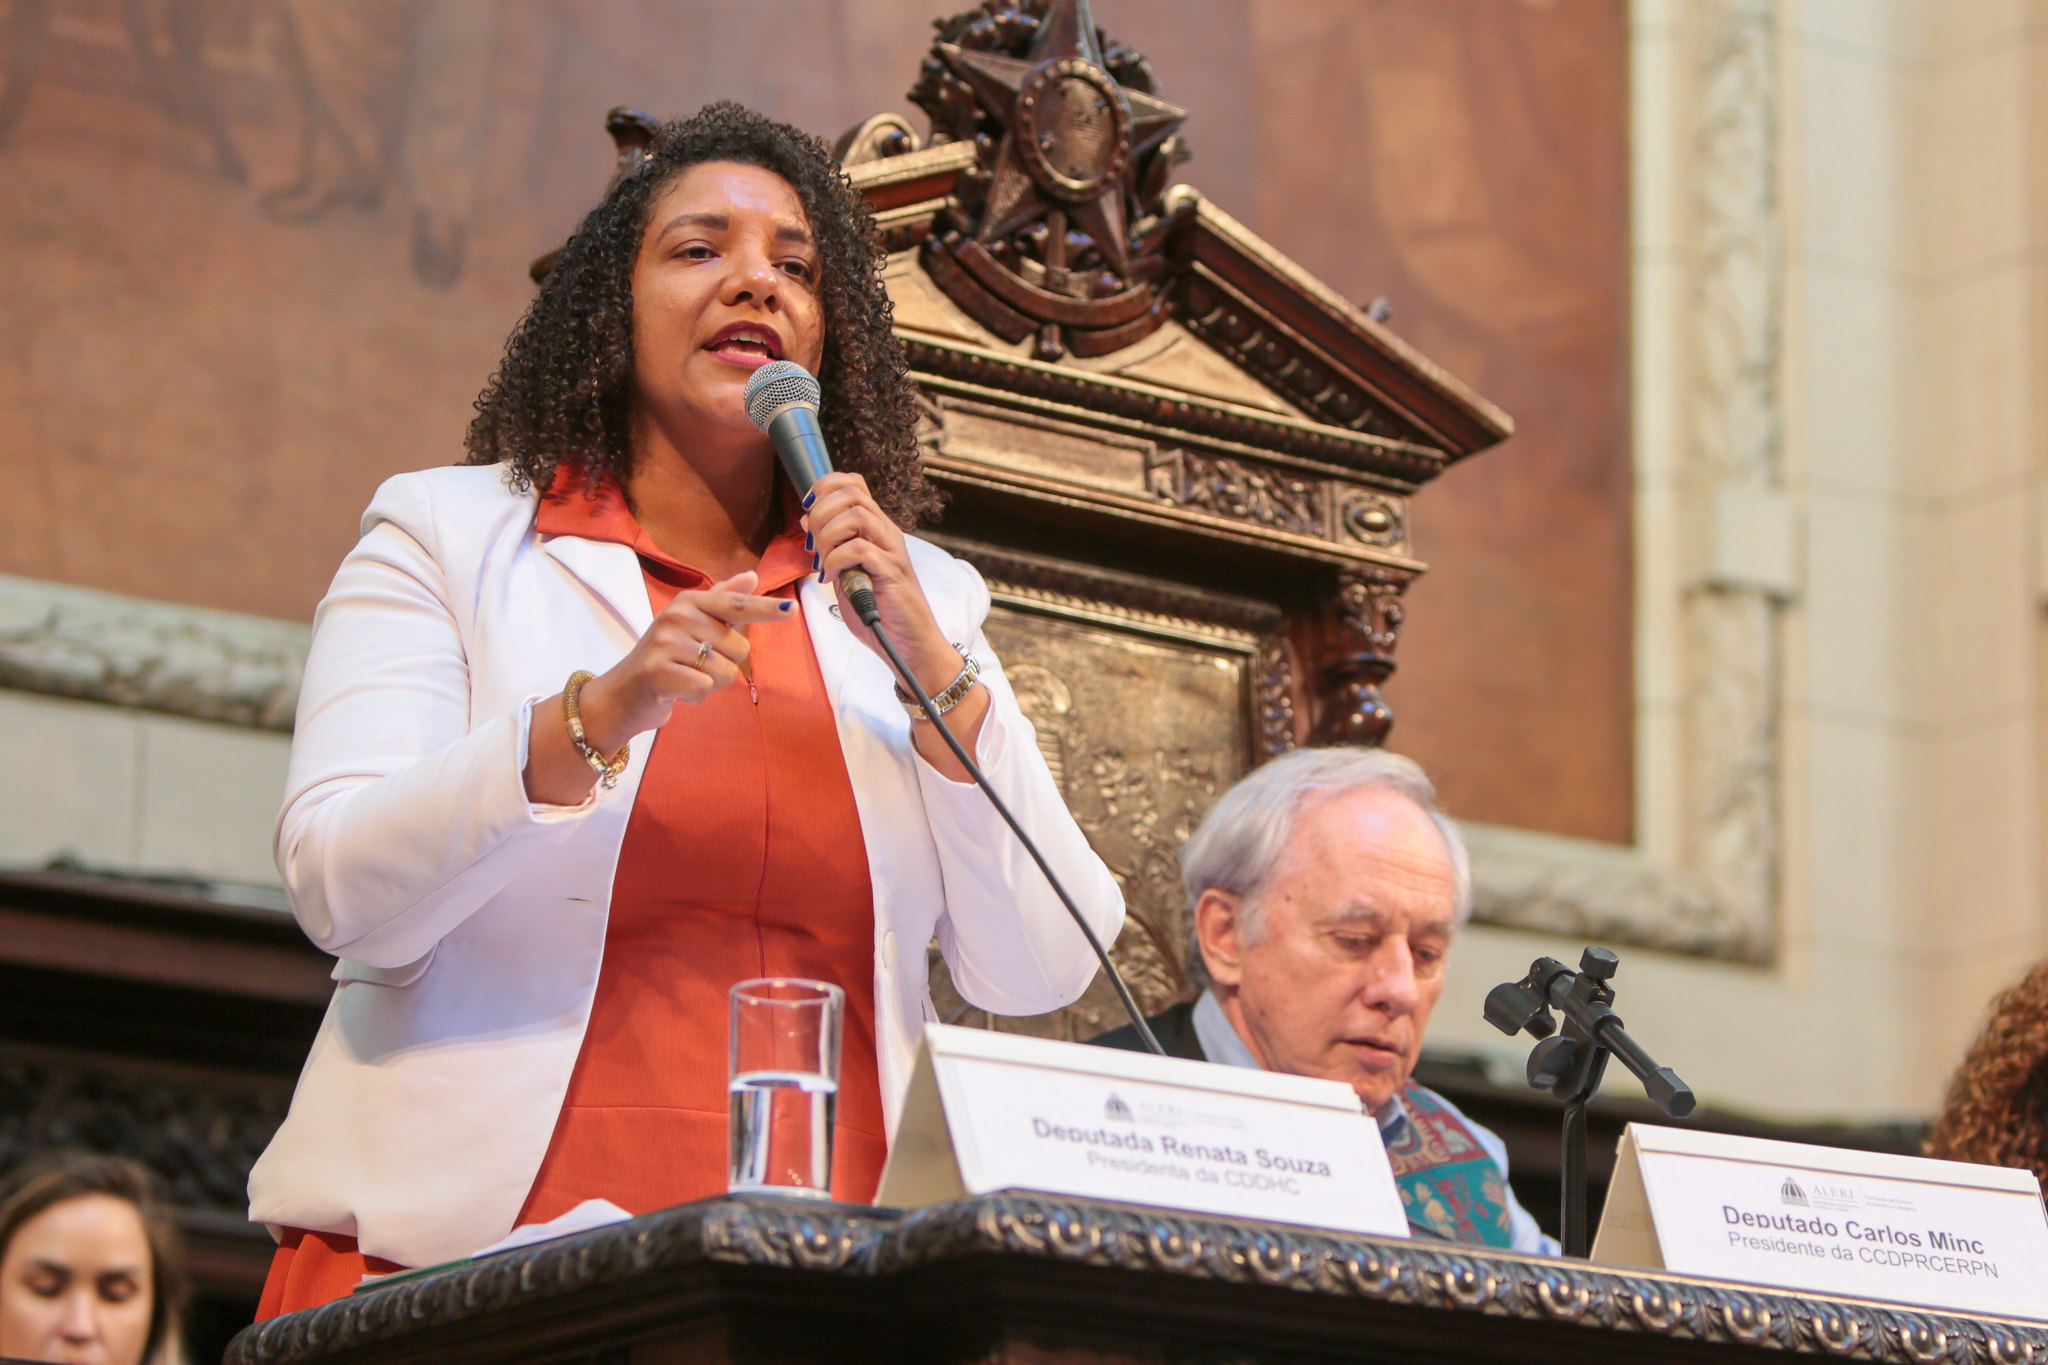 PSOL oficializa candidatura da deputada estadual Renata Souza à prefeitura do RJ